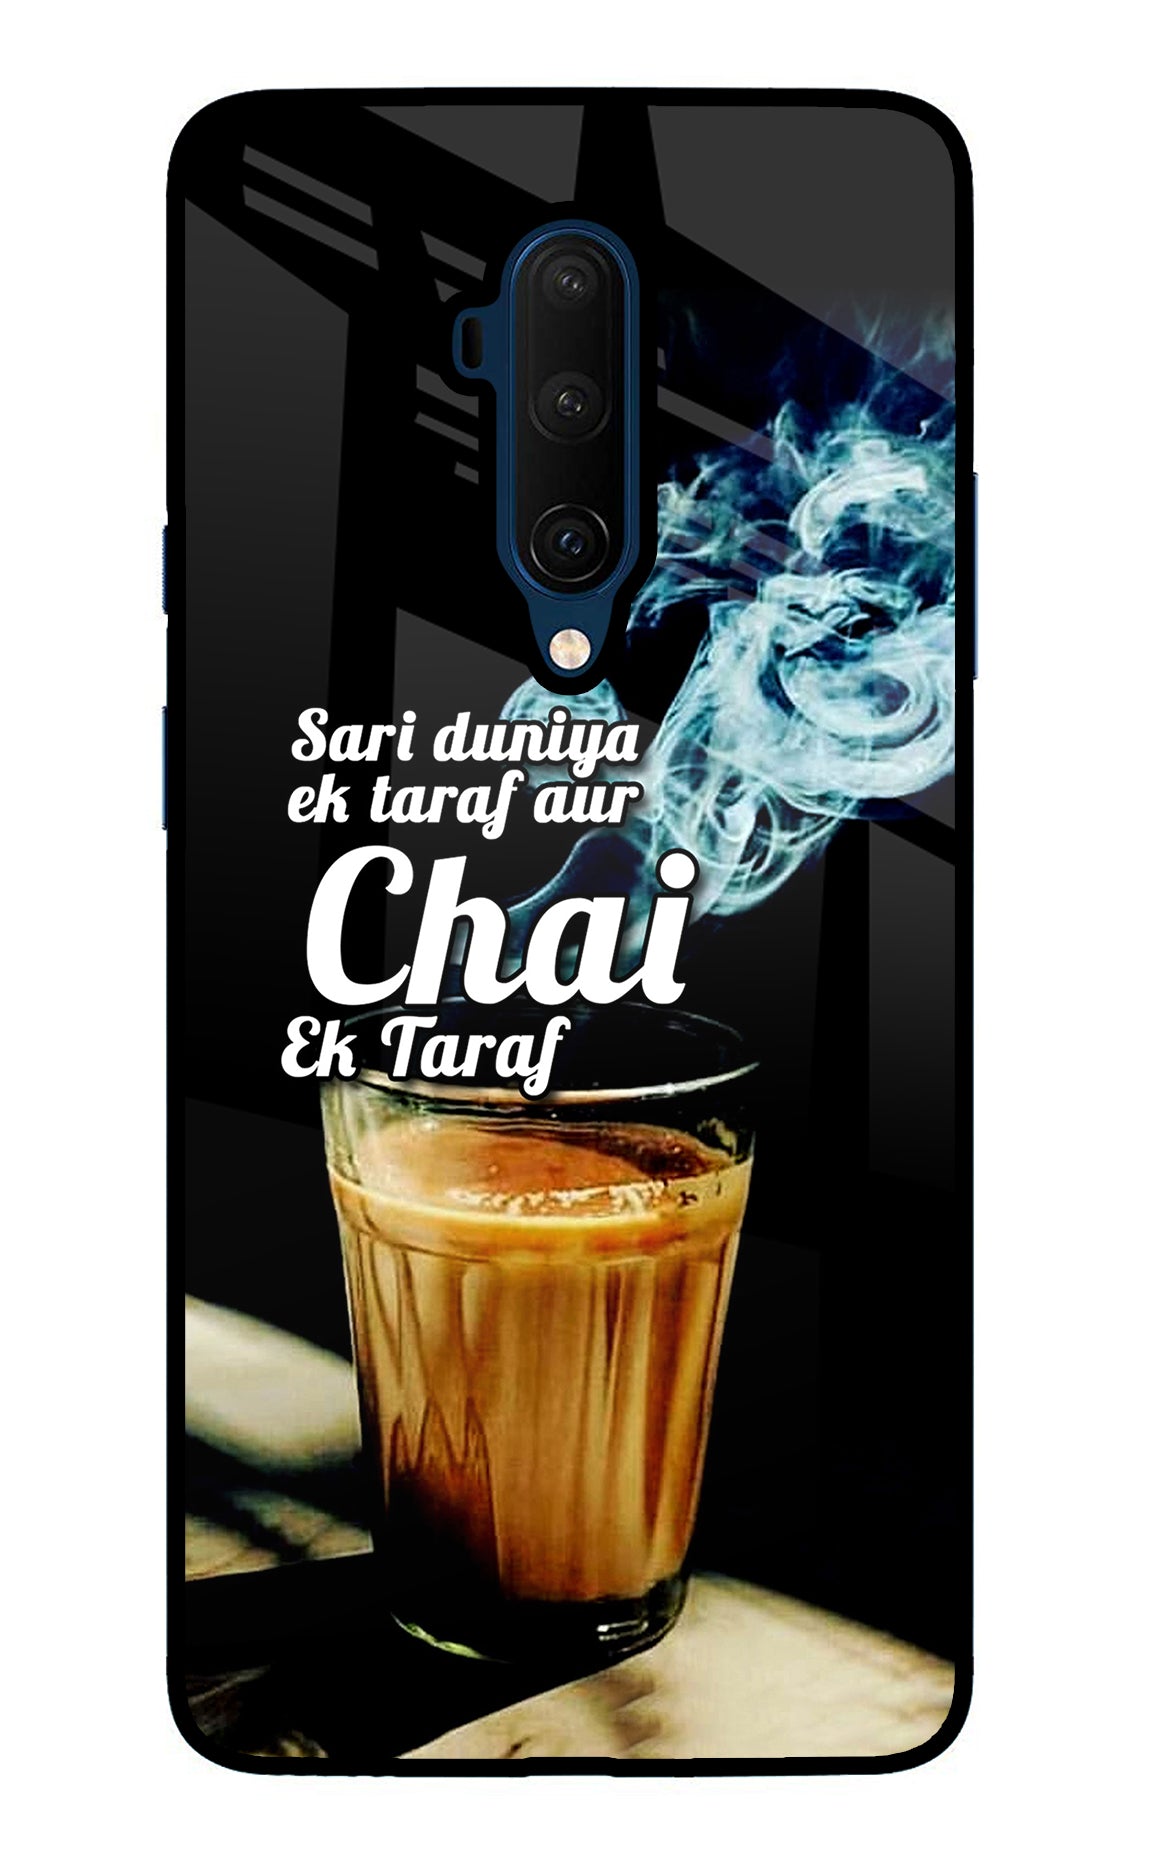 Chai Ek Taraf Quote Oneplus 7T Pro Glass Case